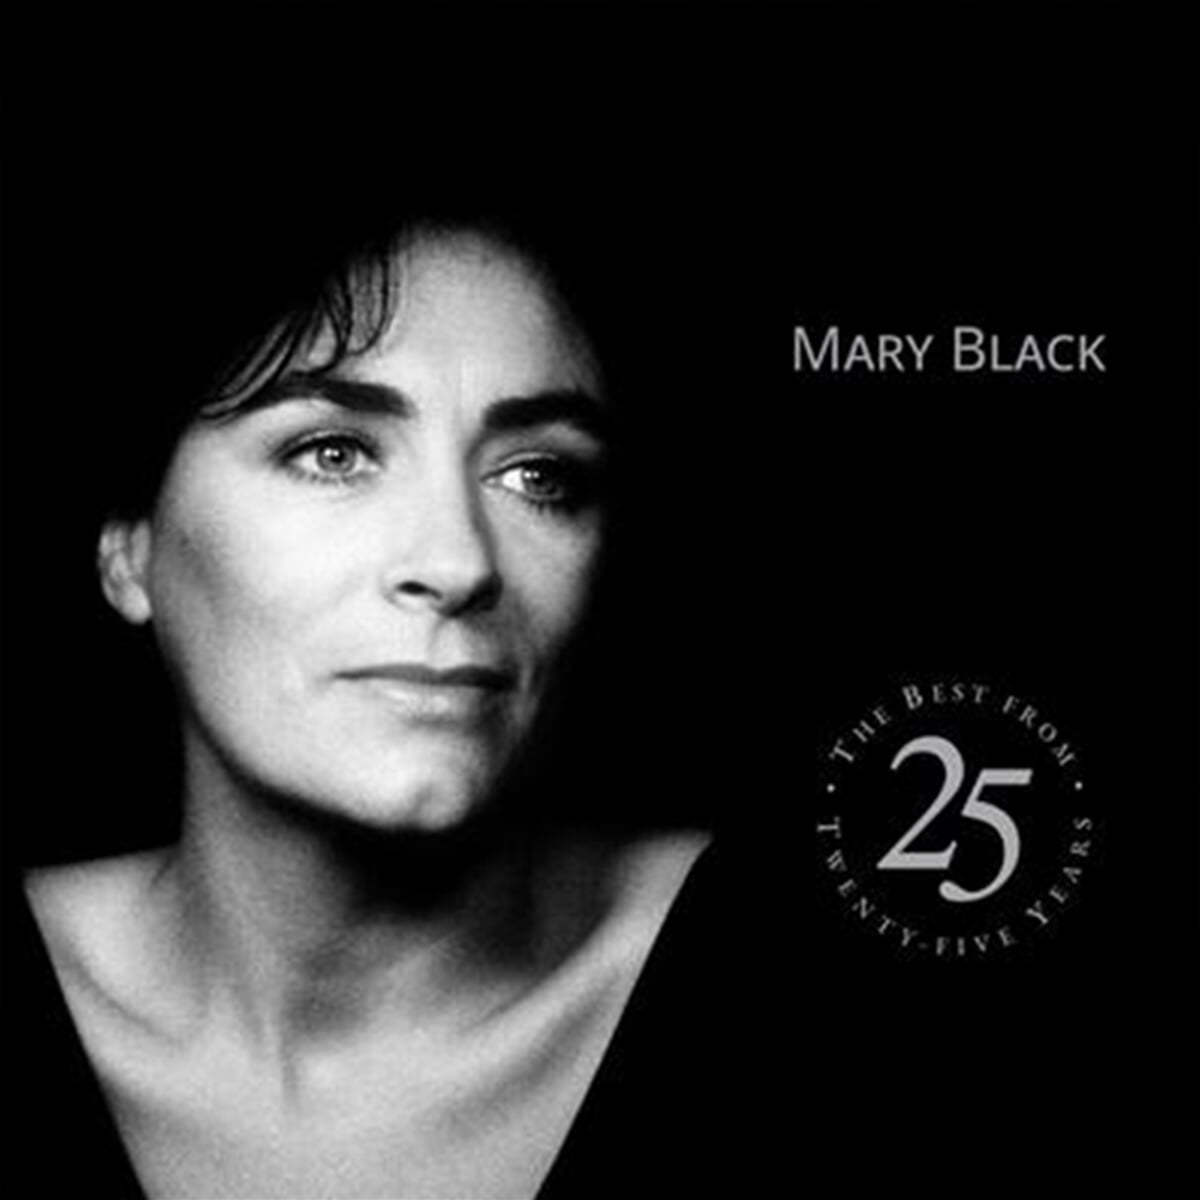 Mary Black (메리 블랙) - The Best From Twenty Five Years [2LP] 